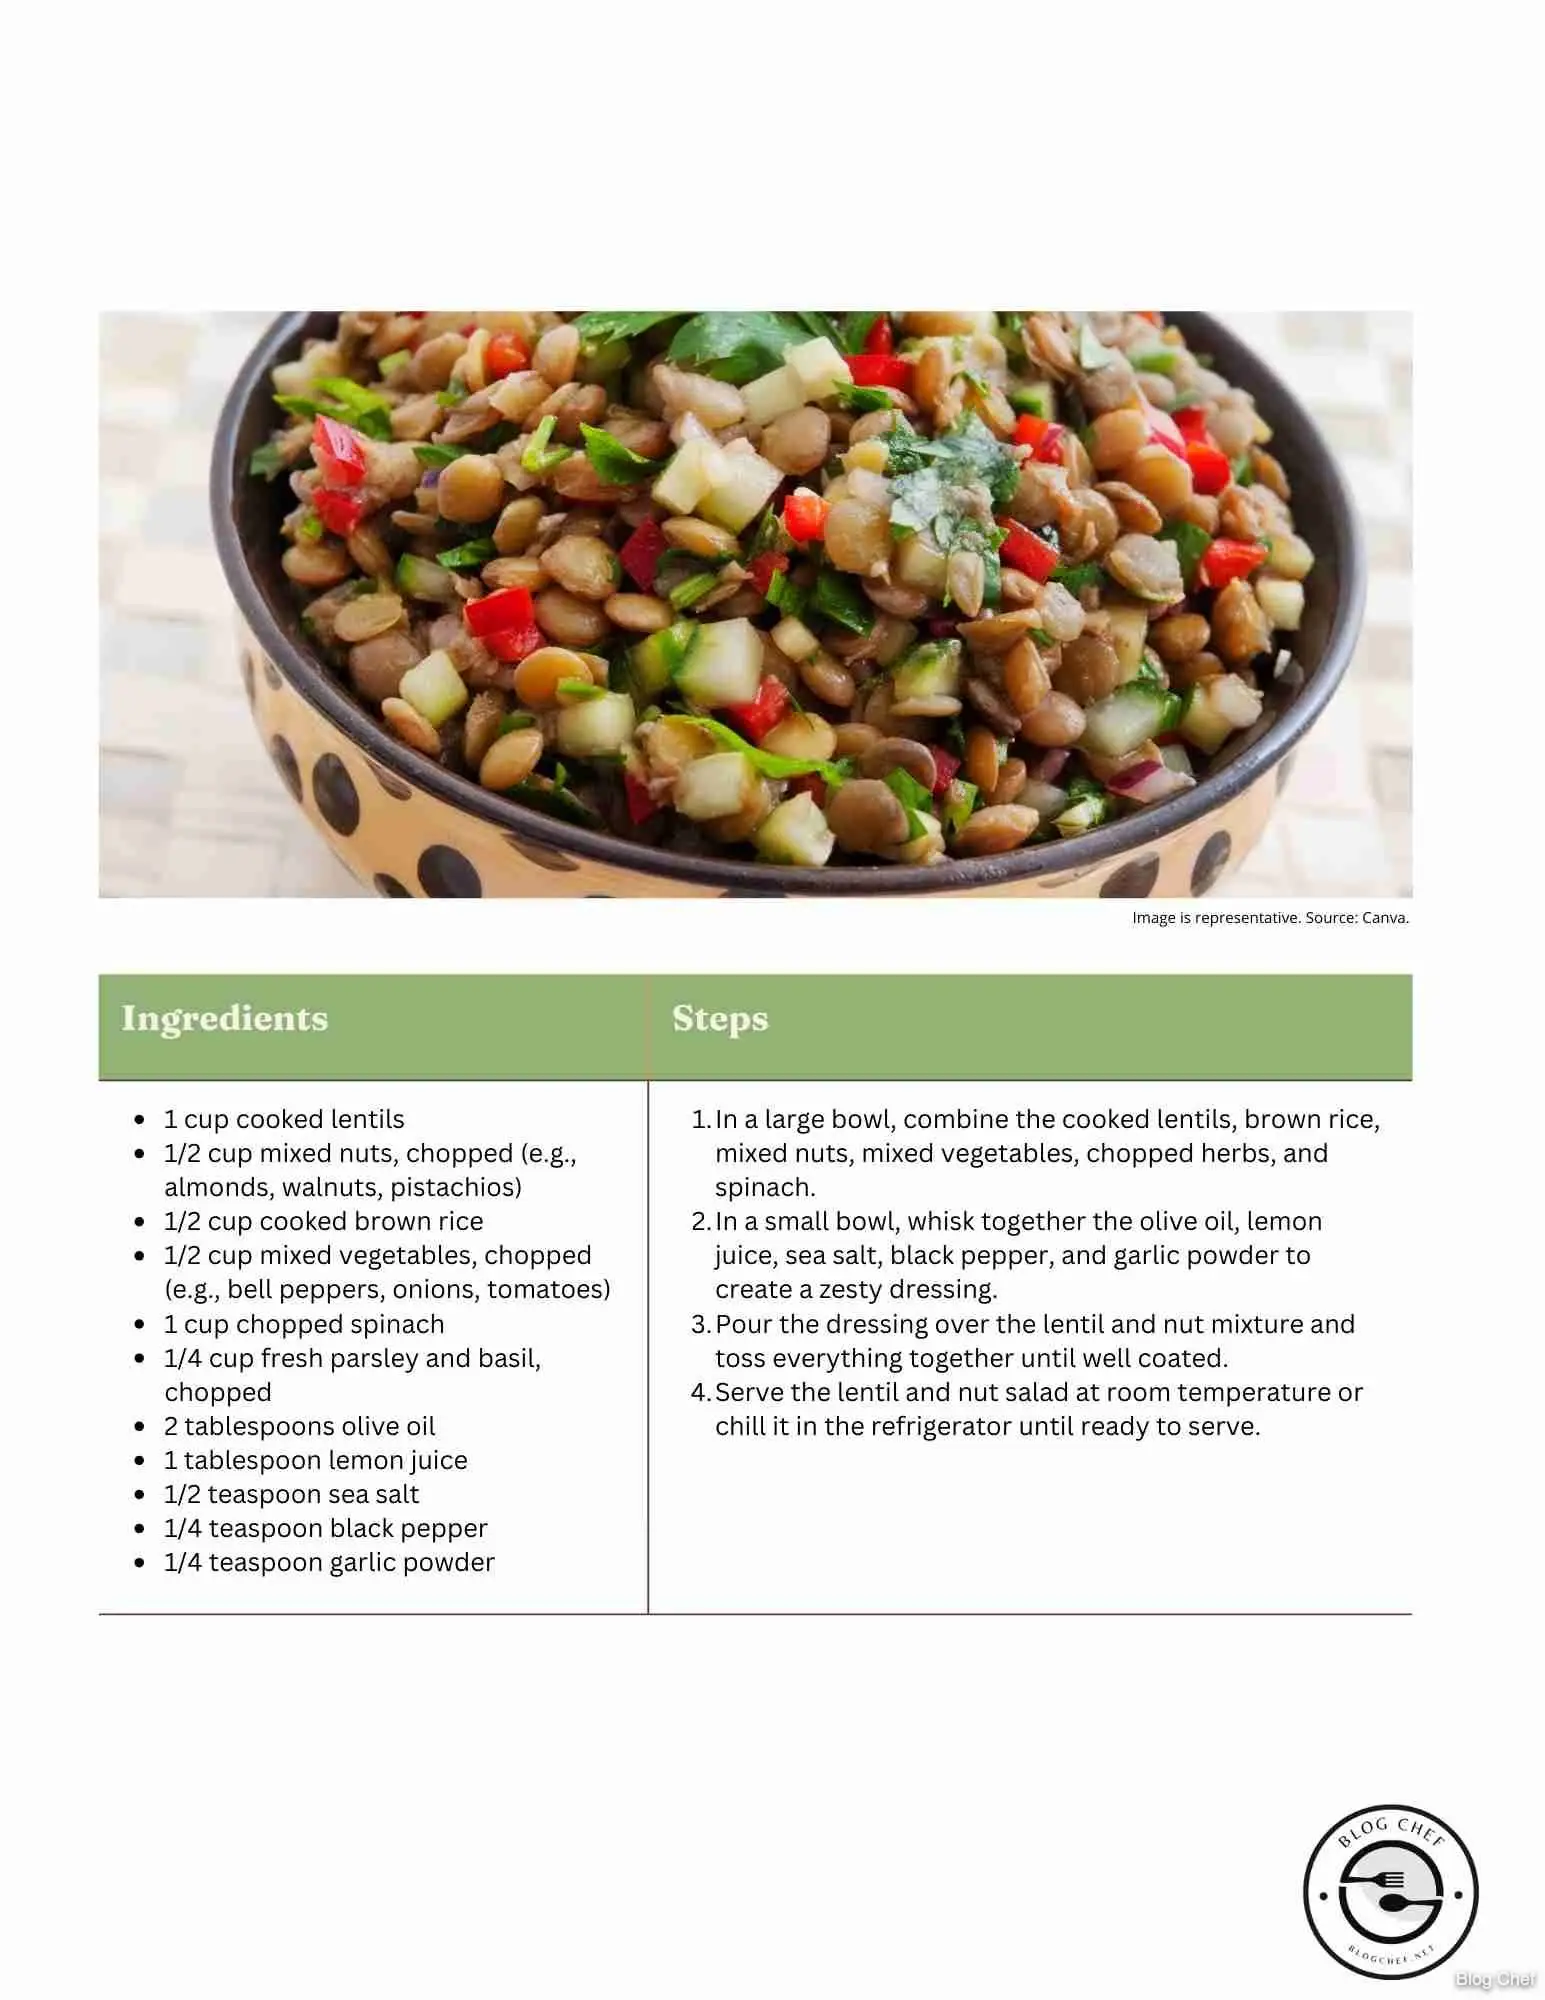 Recipe card for lentil and nut salad.